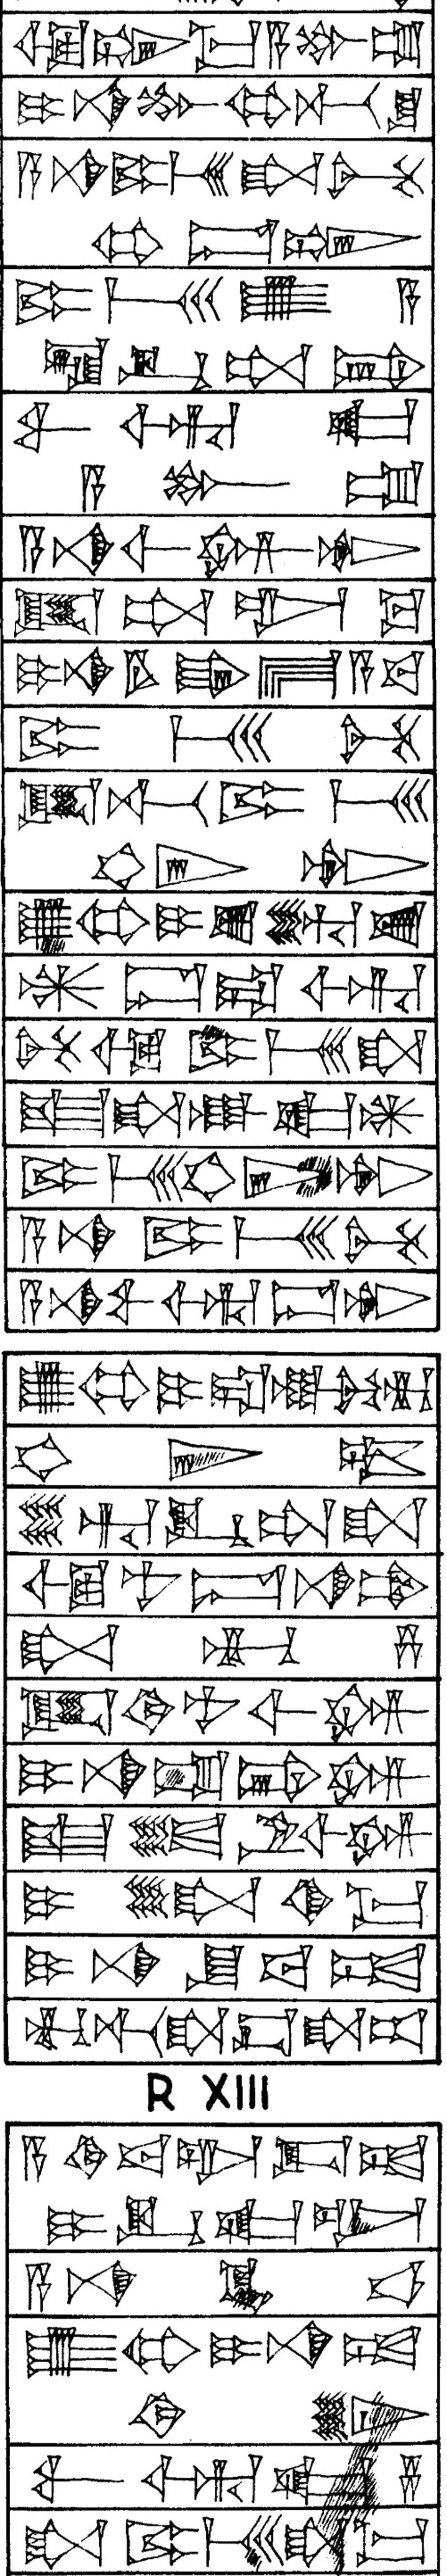 Law § 171 - Cuneiform - Law Code of Hammurabi